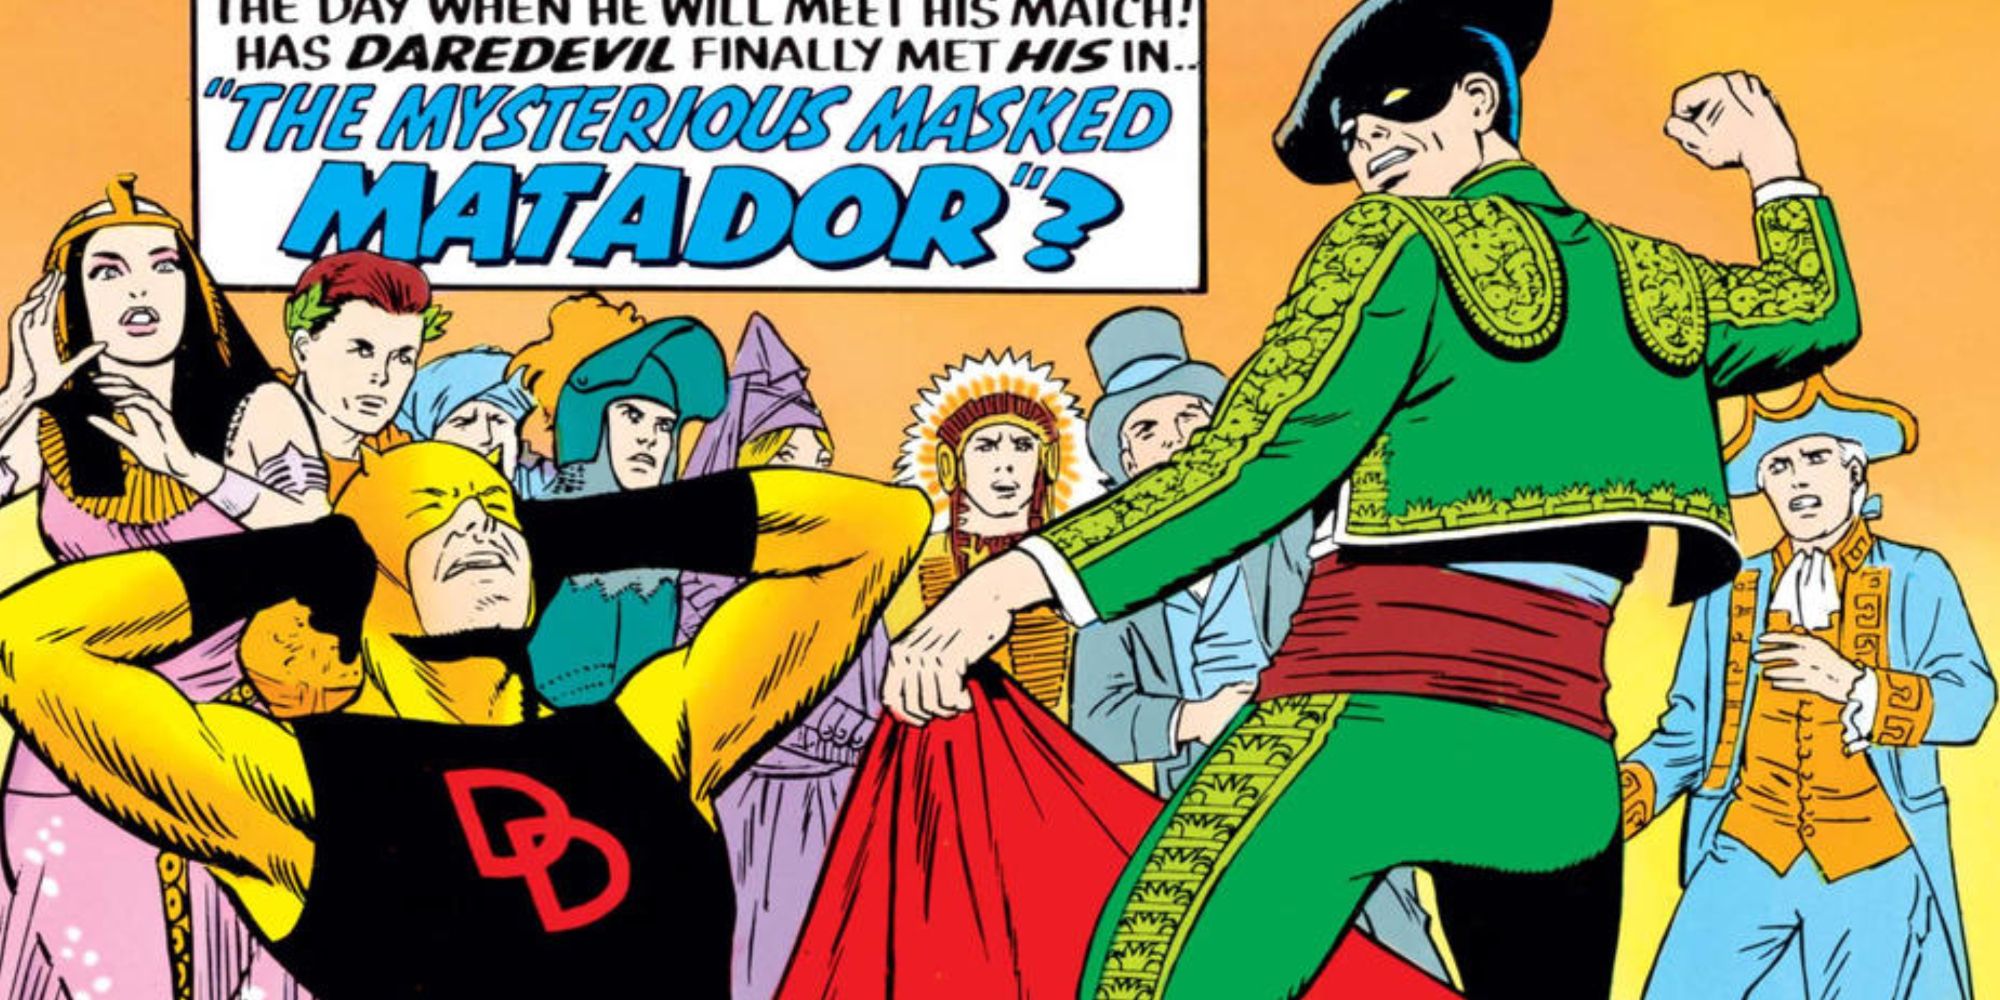 Matador fights Daredevil in Marvel Comics.